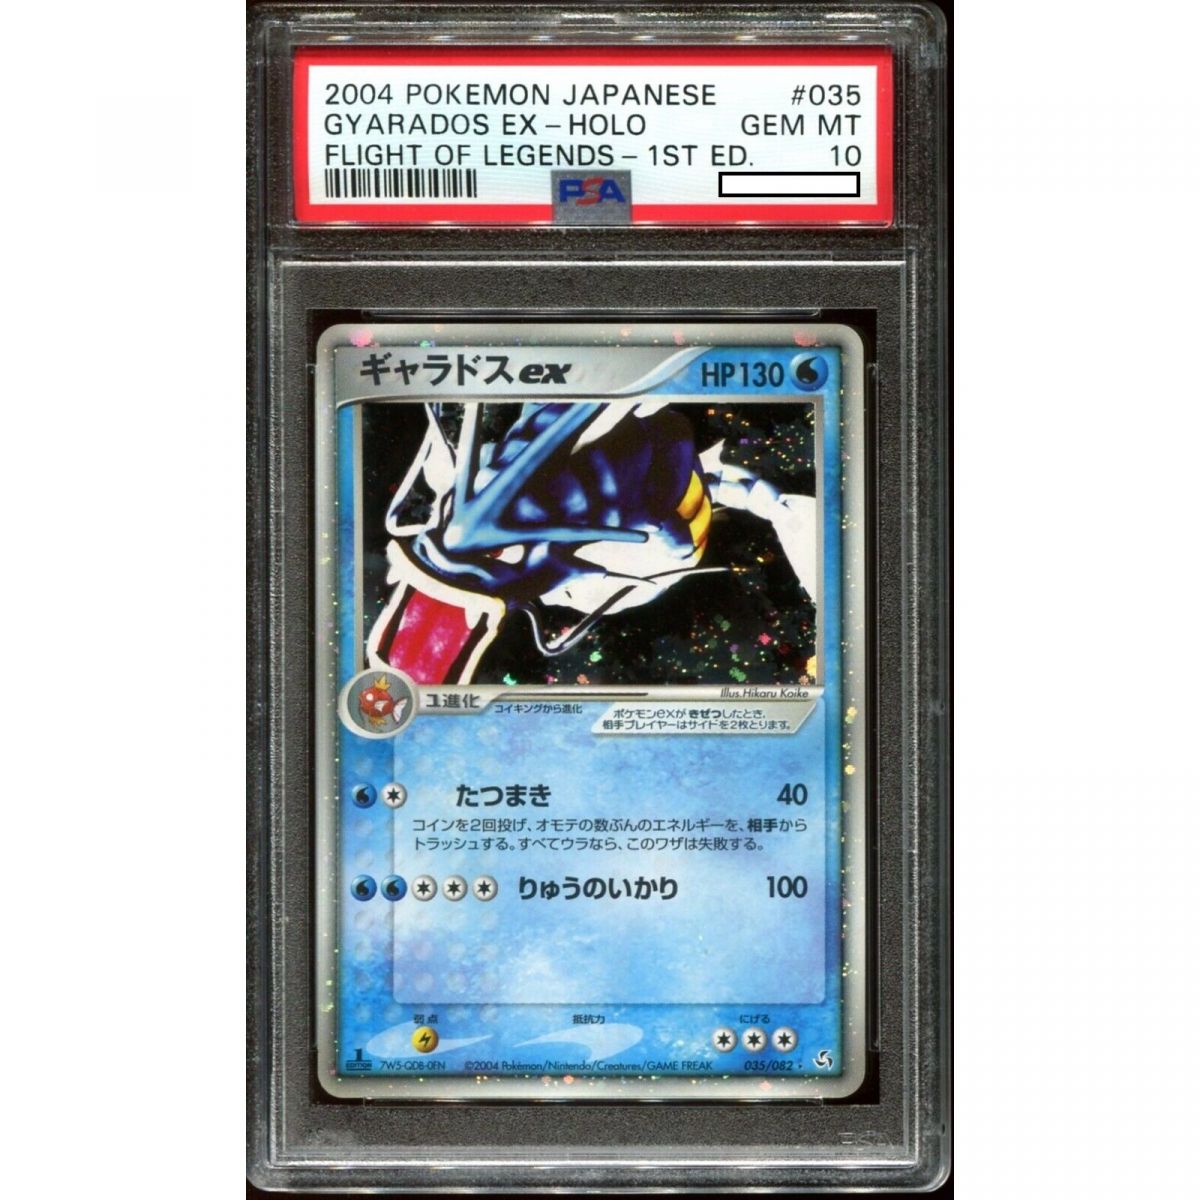 Pokémon - Graded Card - Gyarados Ex Flight Of Legends Japanese 2004 1st Edition [PSA 10 - Gem Mint]